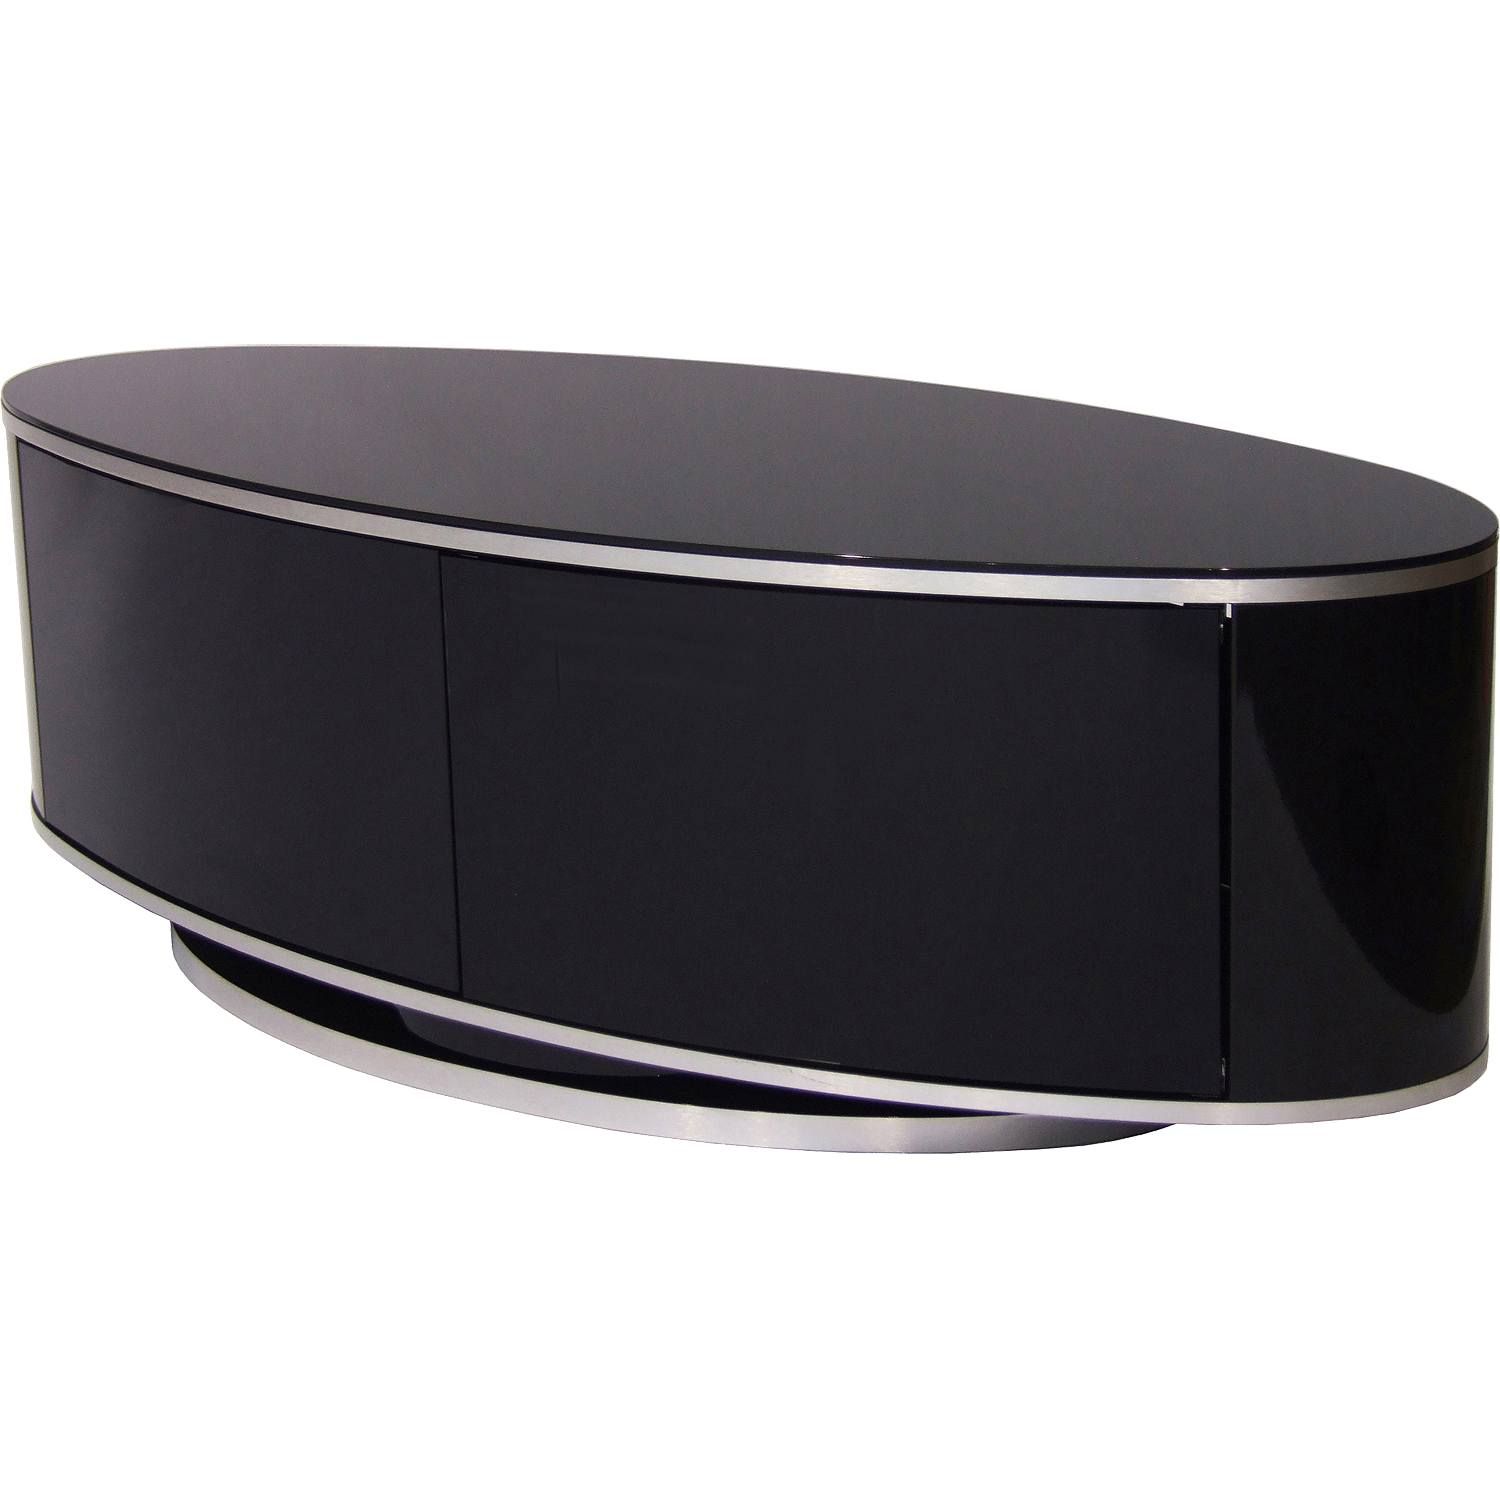 Mda Designs Luna Av High Gloss Black Oval Tv Cabinet Up To Regarding Oval Tv Unit (View 12 of 15)